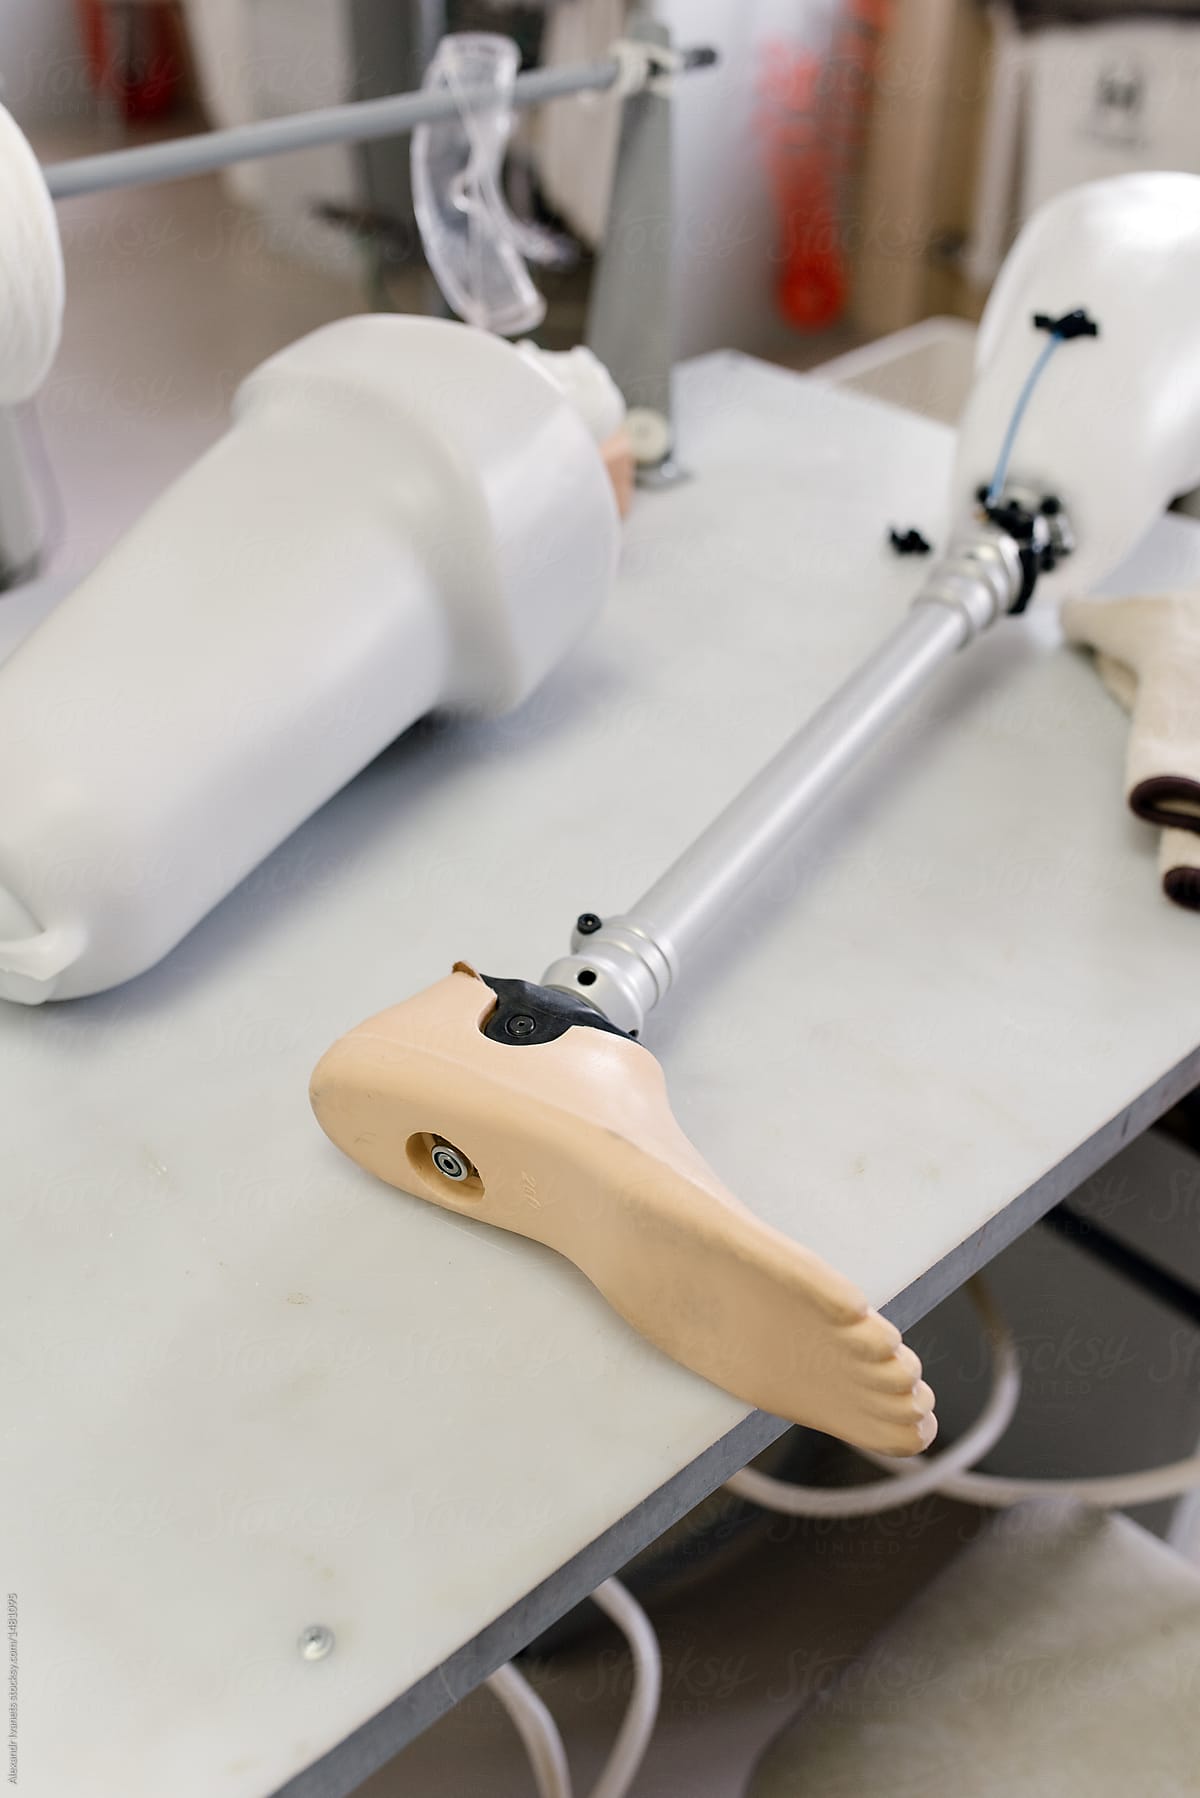 Modern prosthesis on table